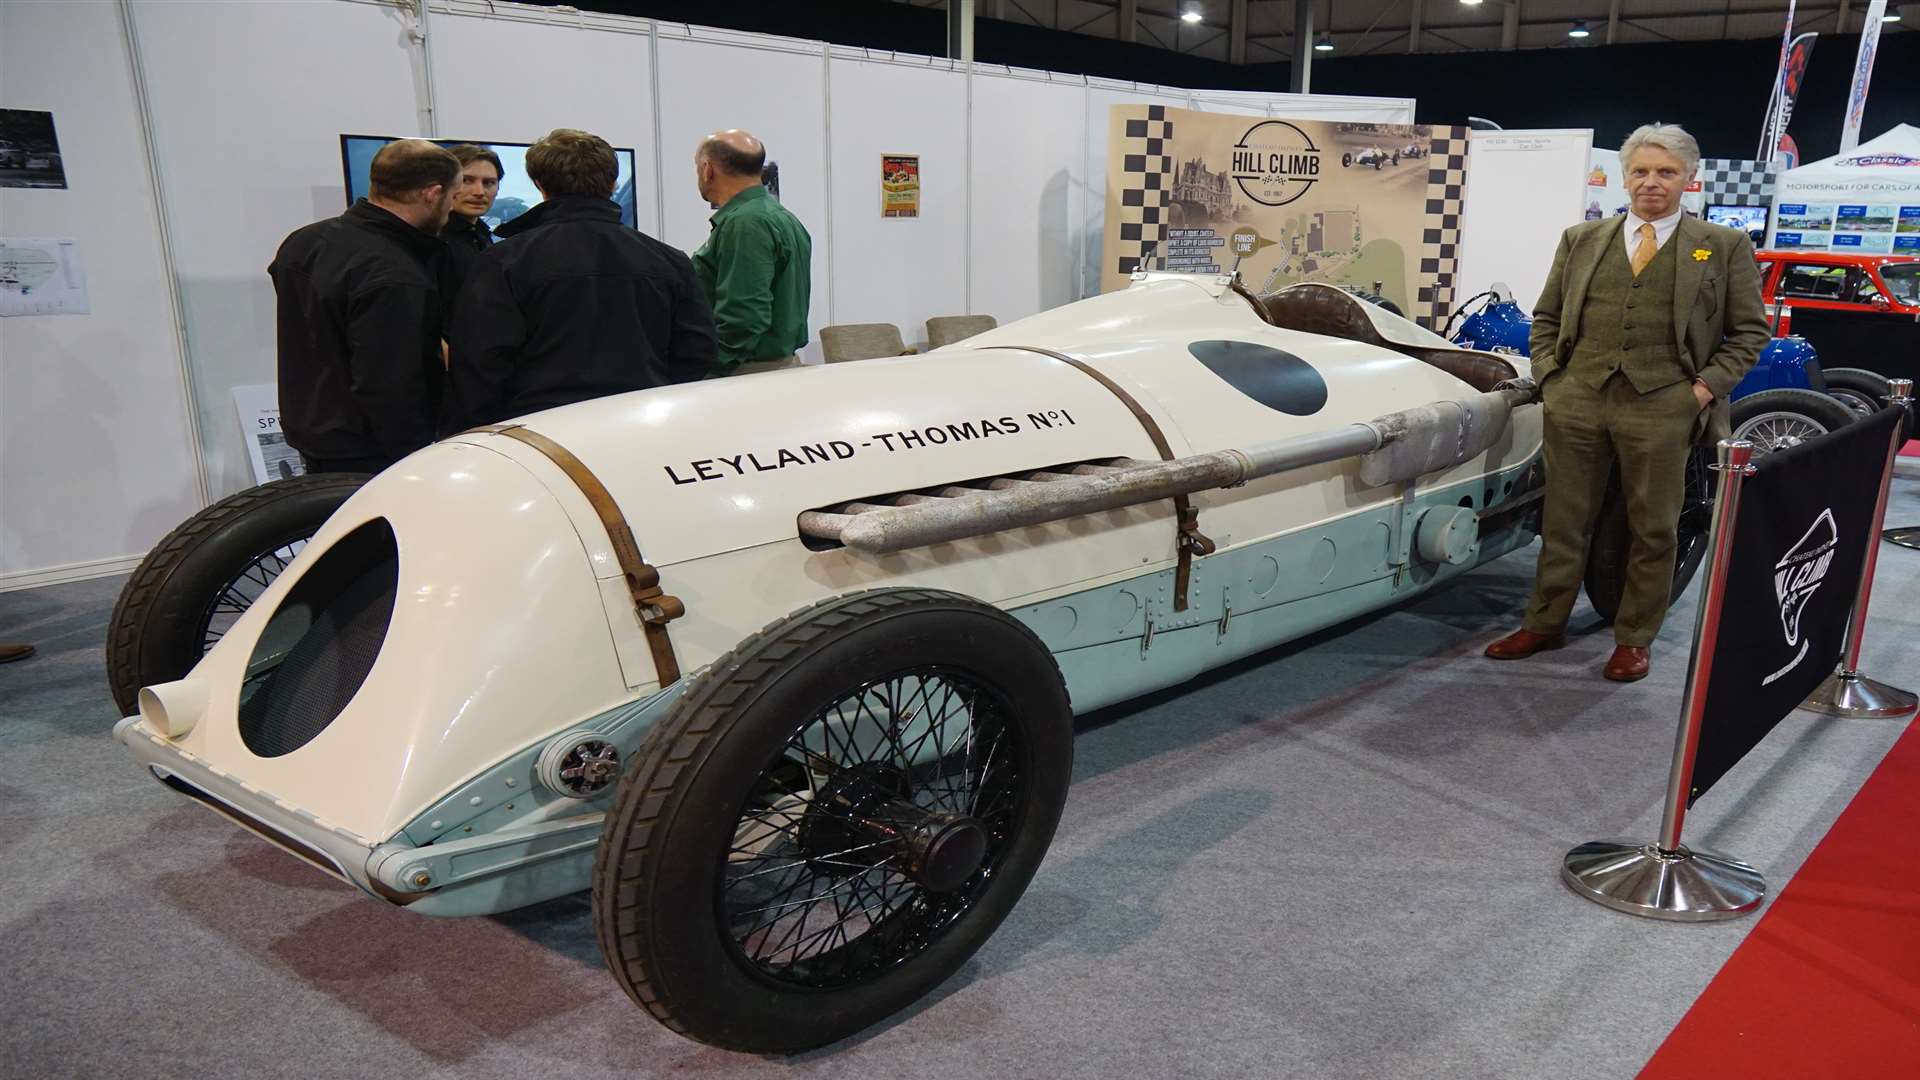 The restored Leyland-Thomas car